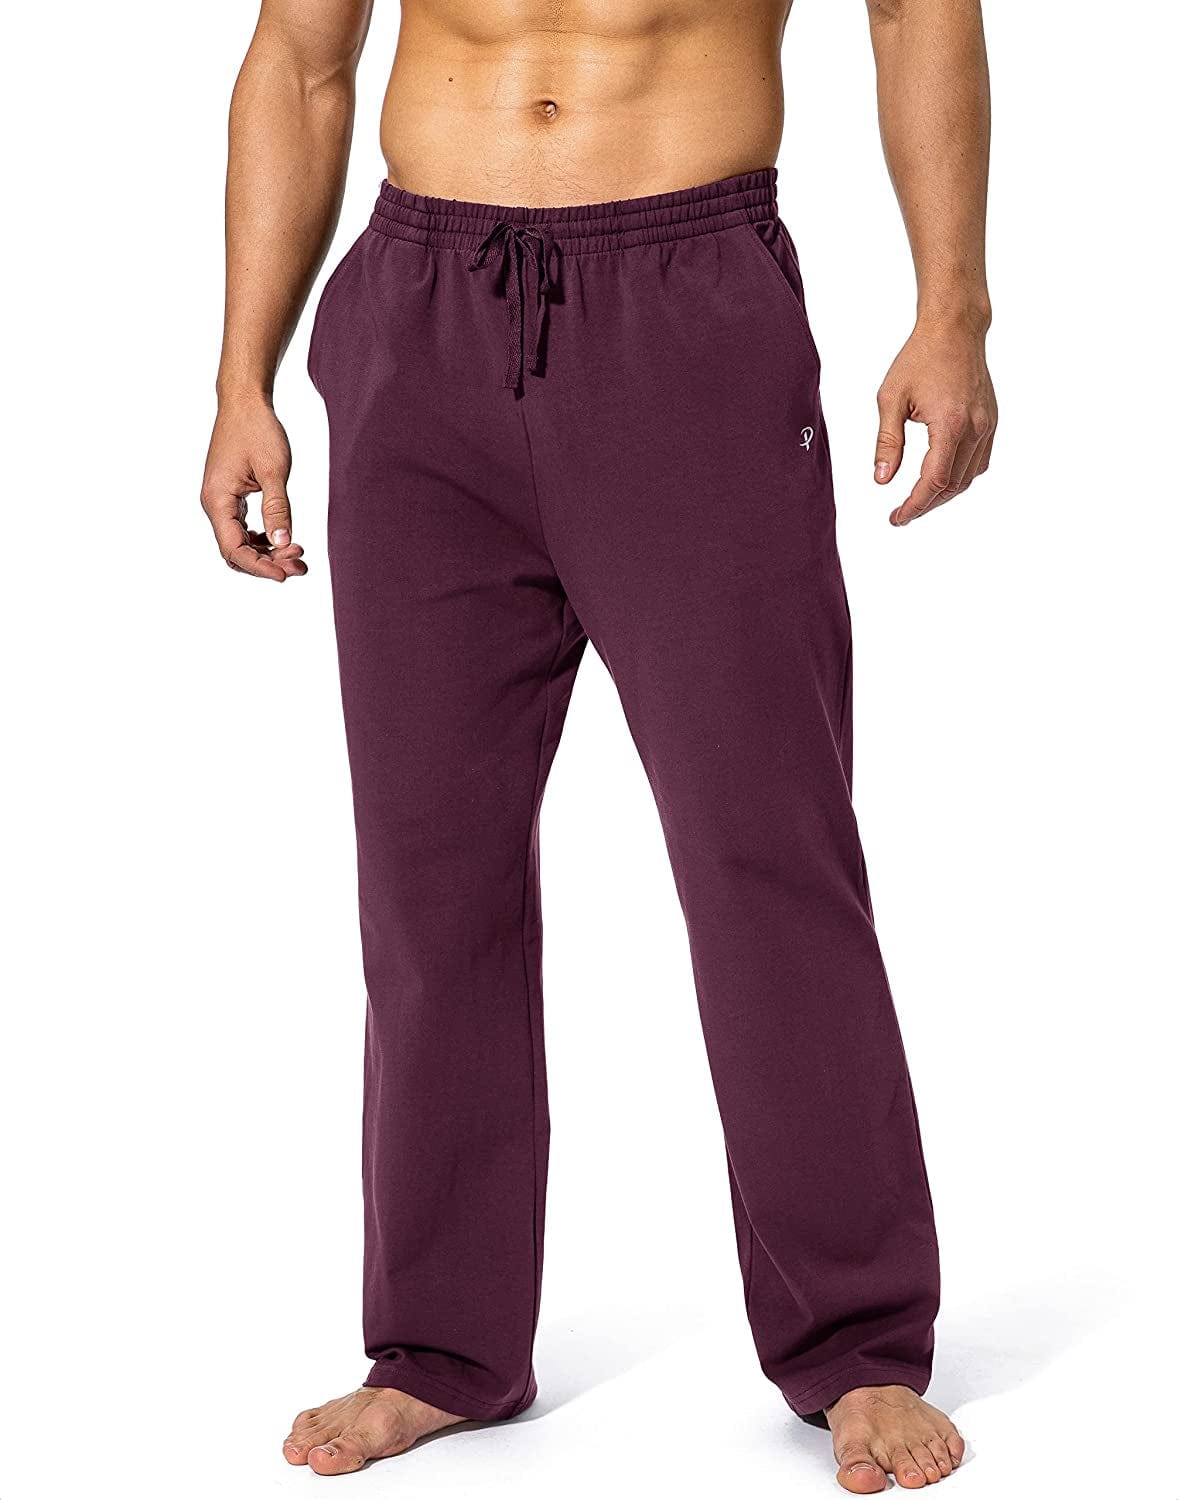 YUHAOTIN Mens Cuffed Lounge Pants Men Casual Soft Pant Sweatpants